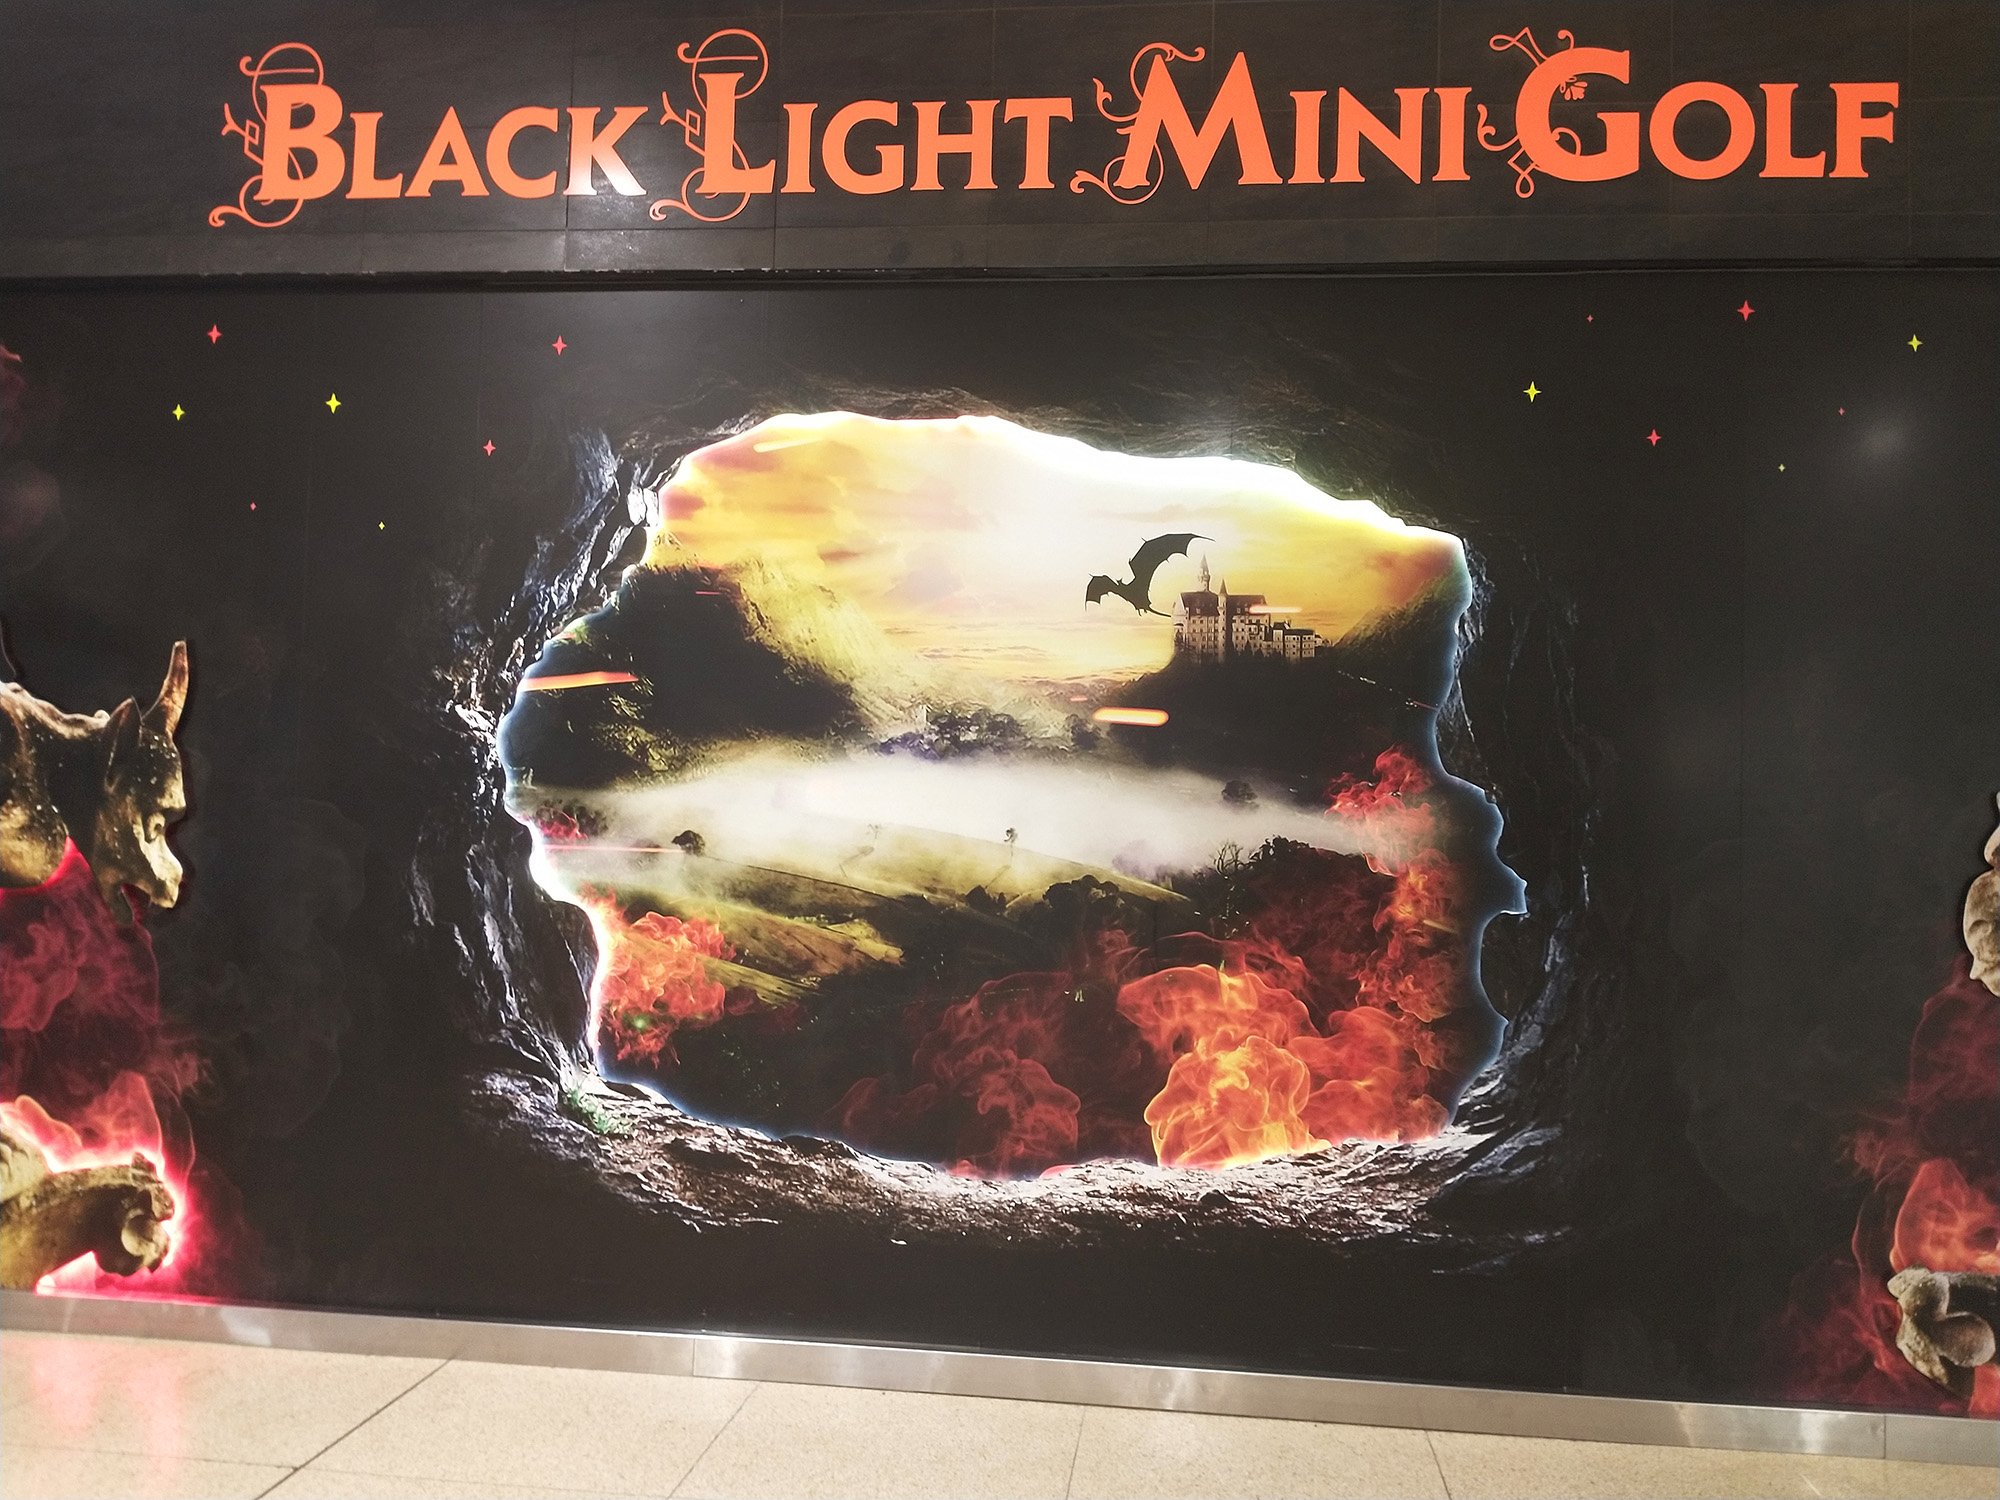 Black light minigolf, always a must. 